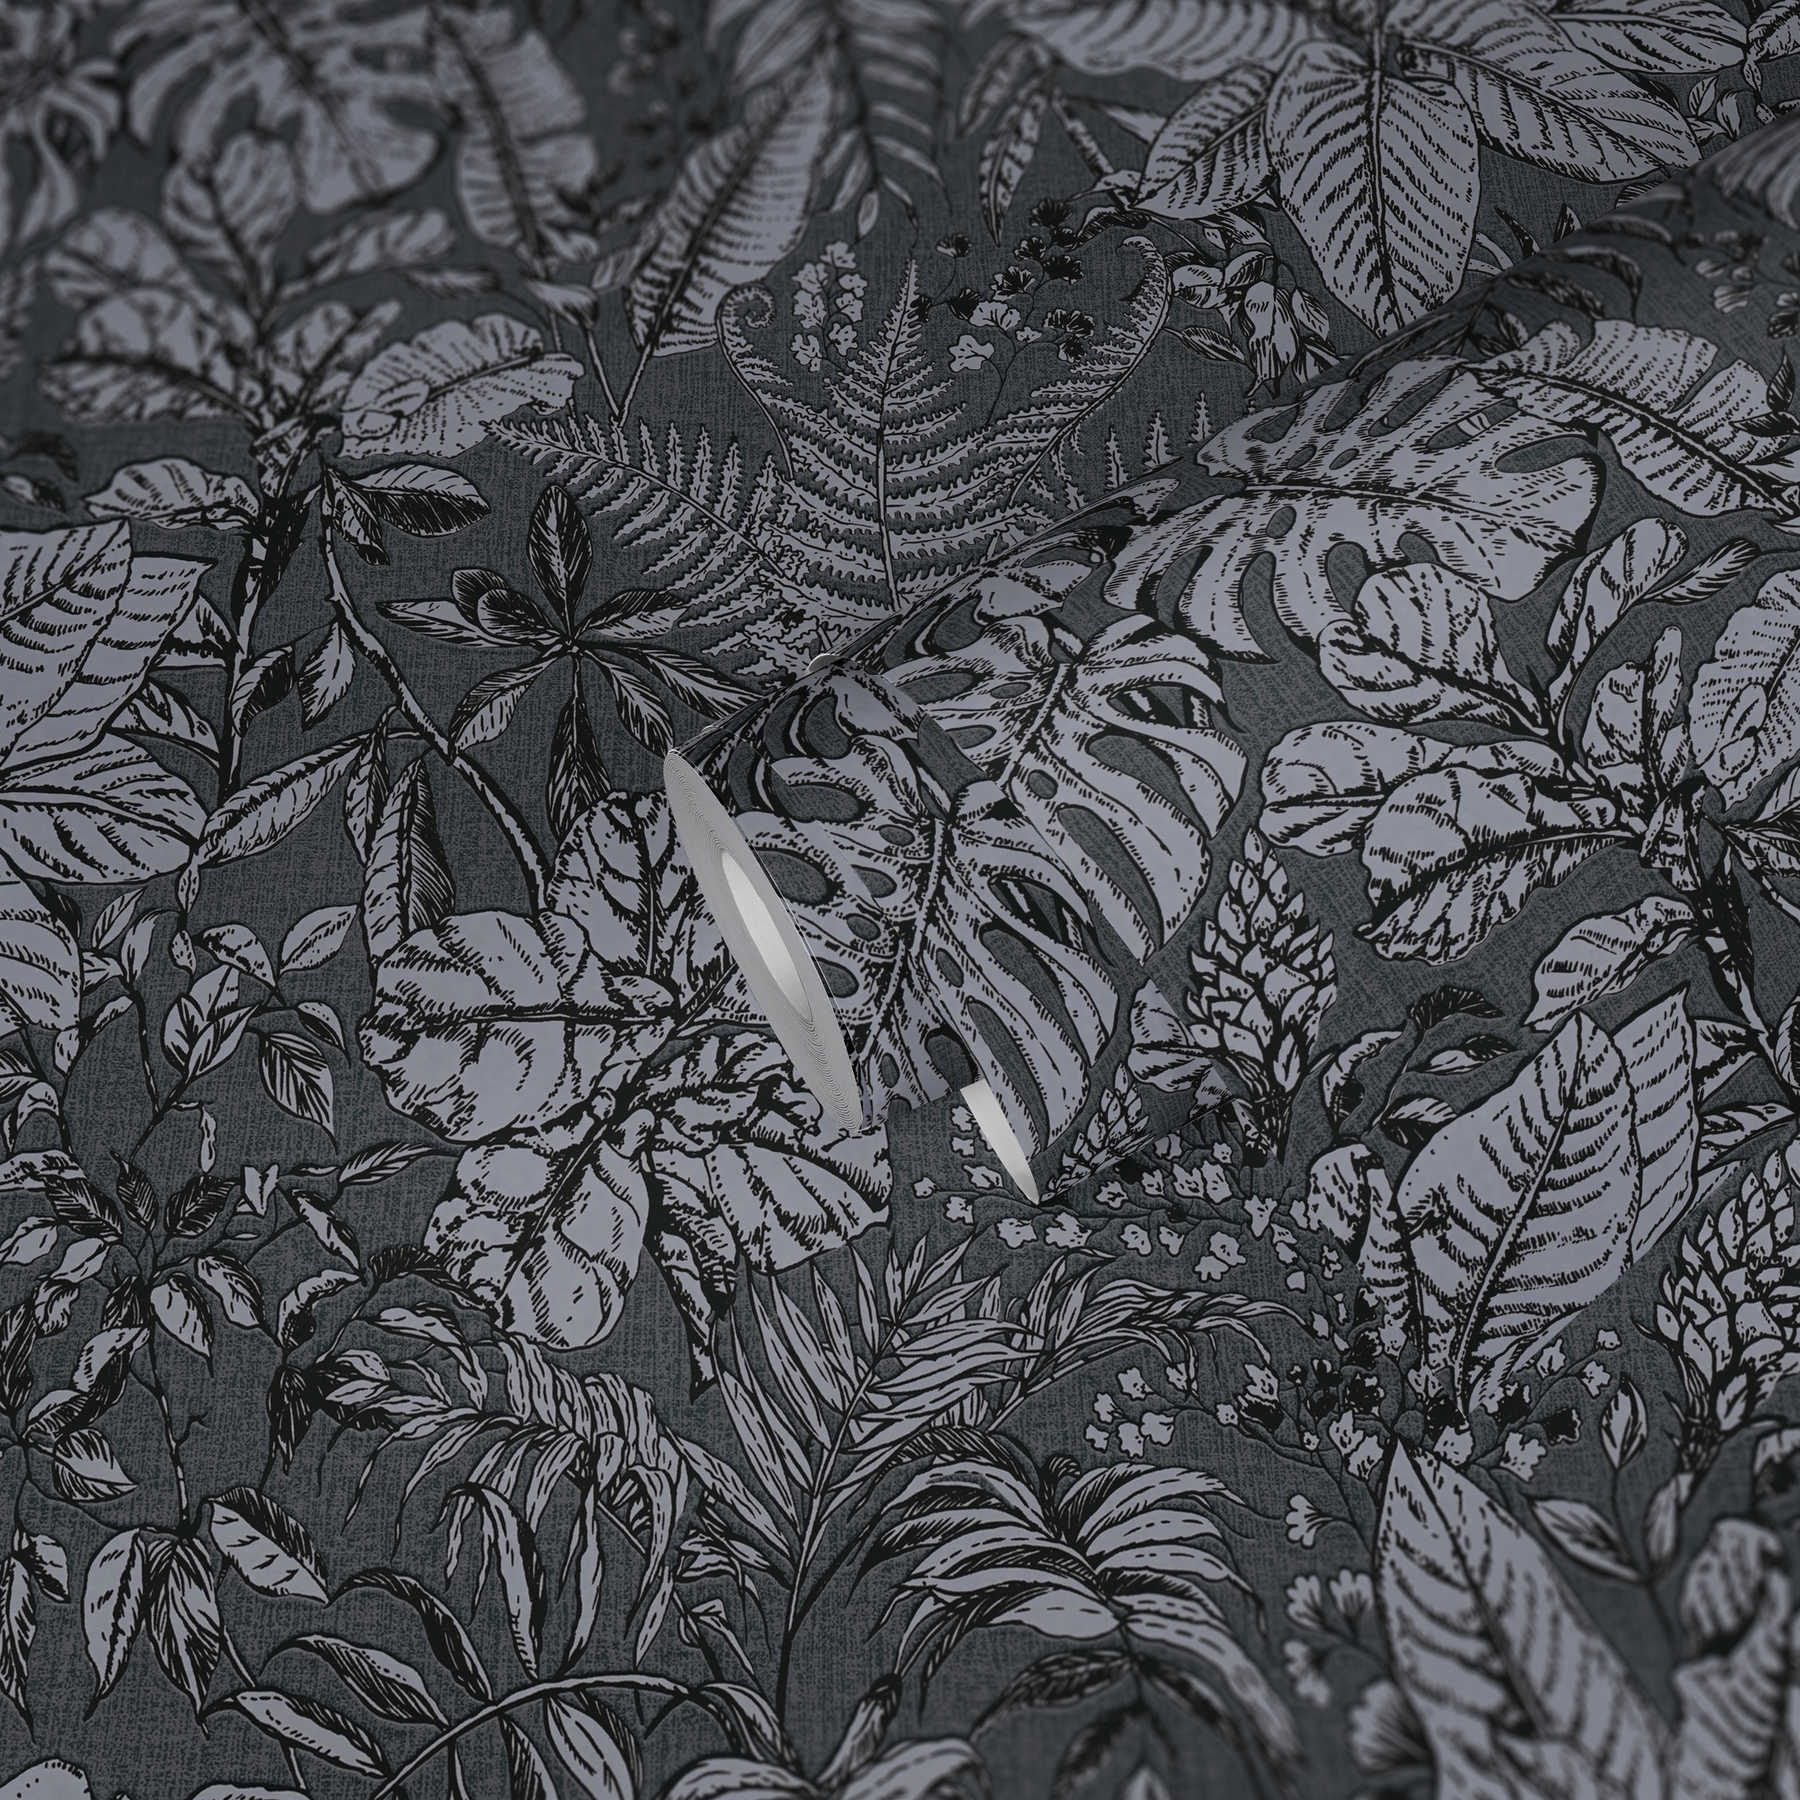             Wallpaper jungle pattern, monstera leaves & ferns - grey, white
        